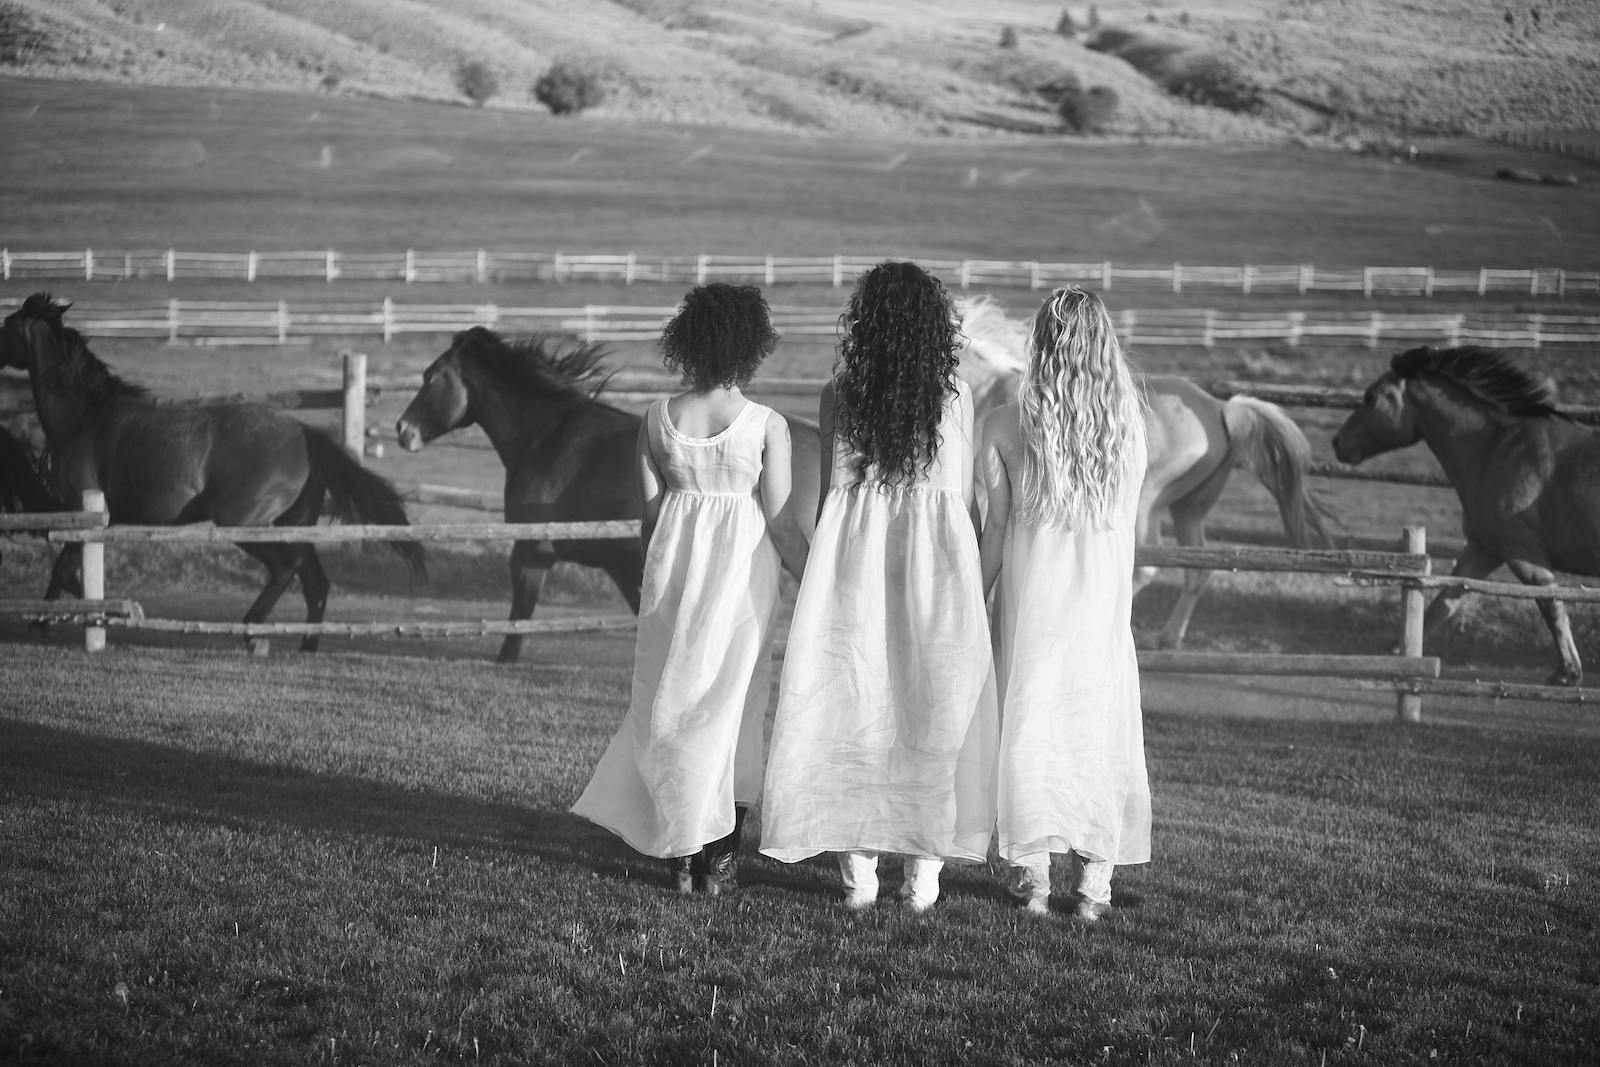 Three women in white dresses watching horses galloping past